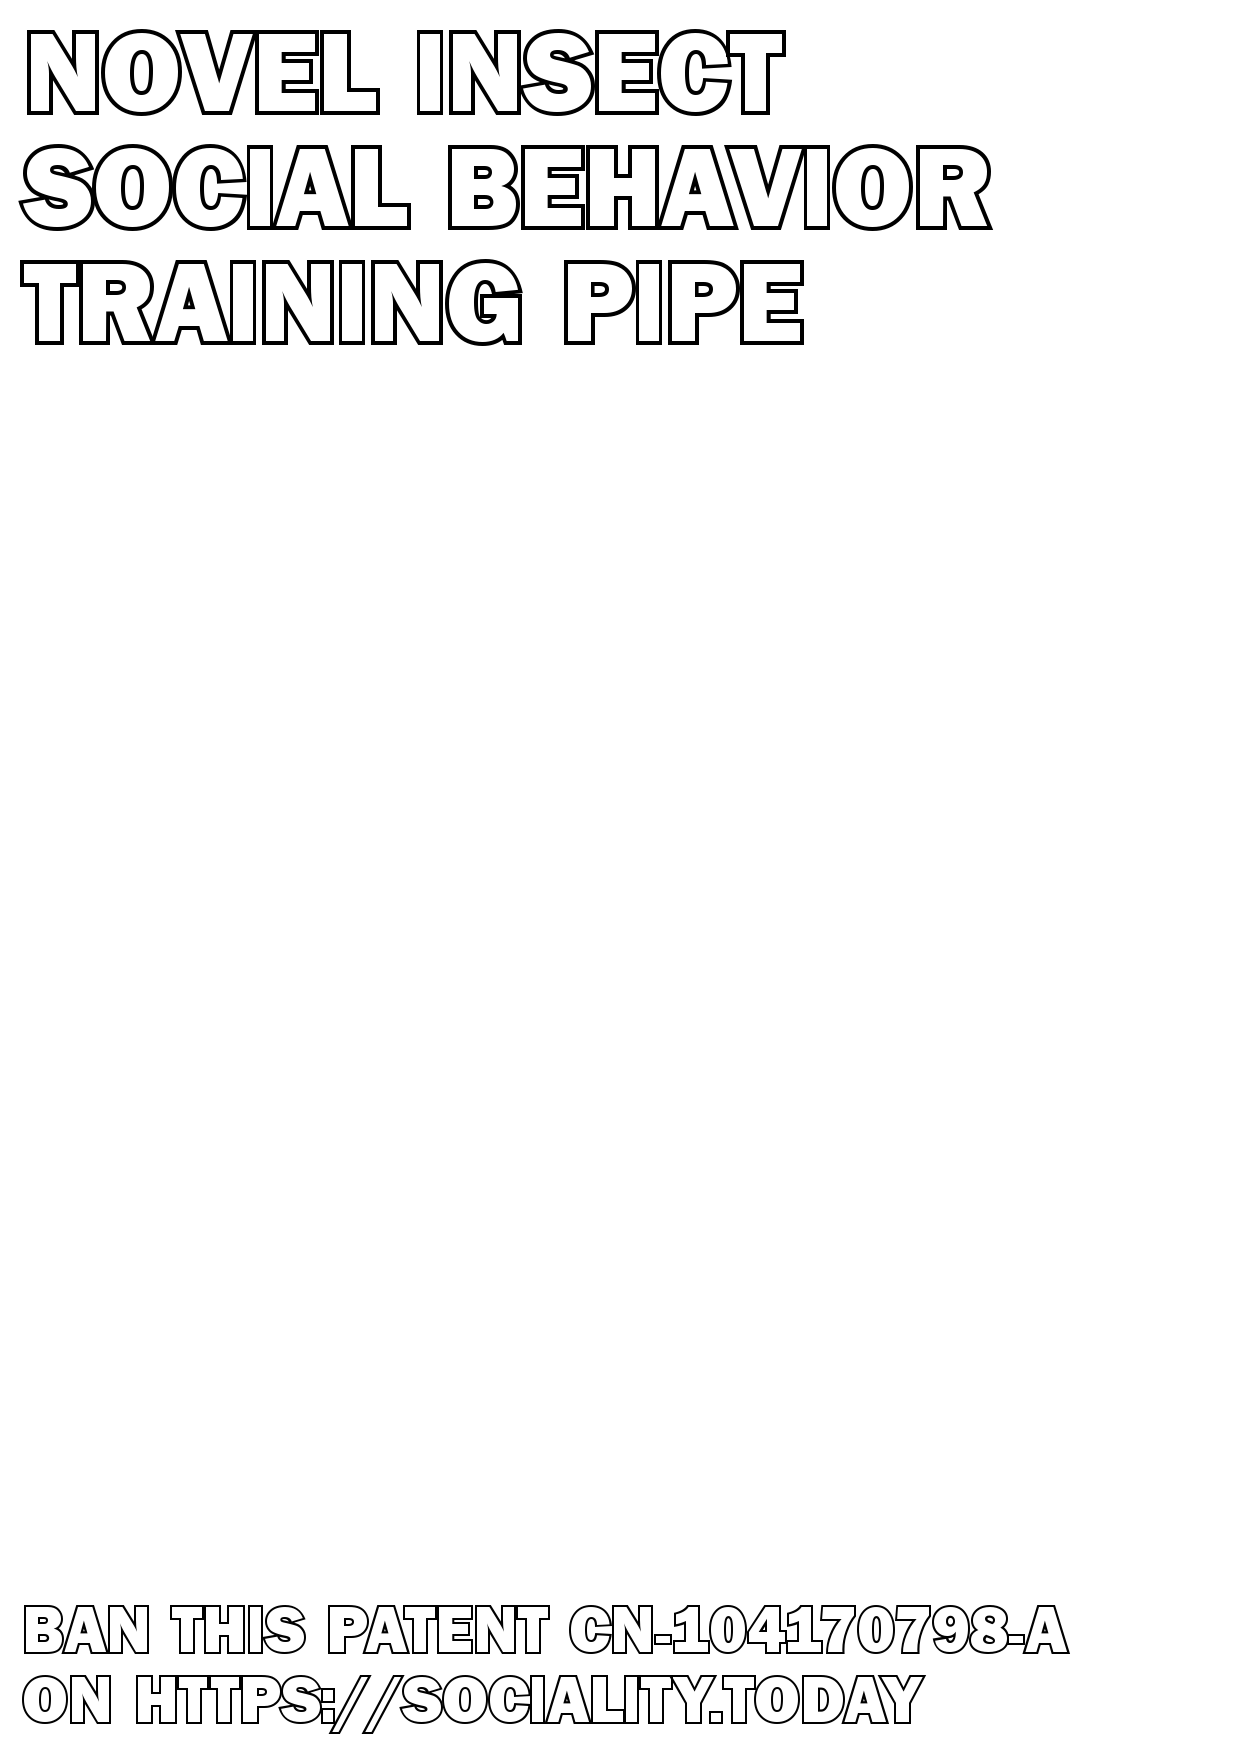 Novel insect social behavior training pipe  - CN-104170798-A